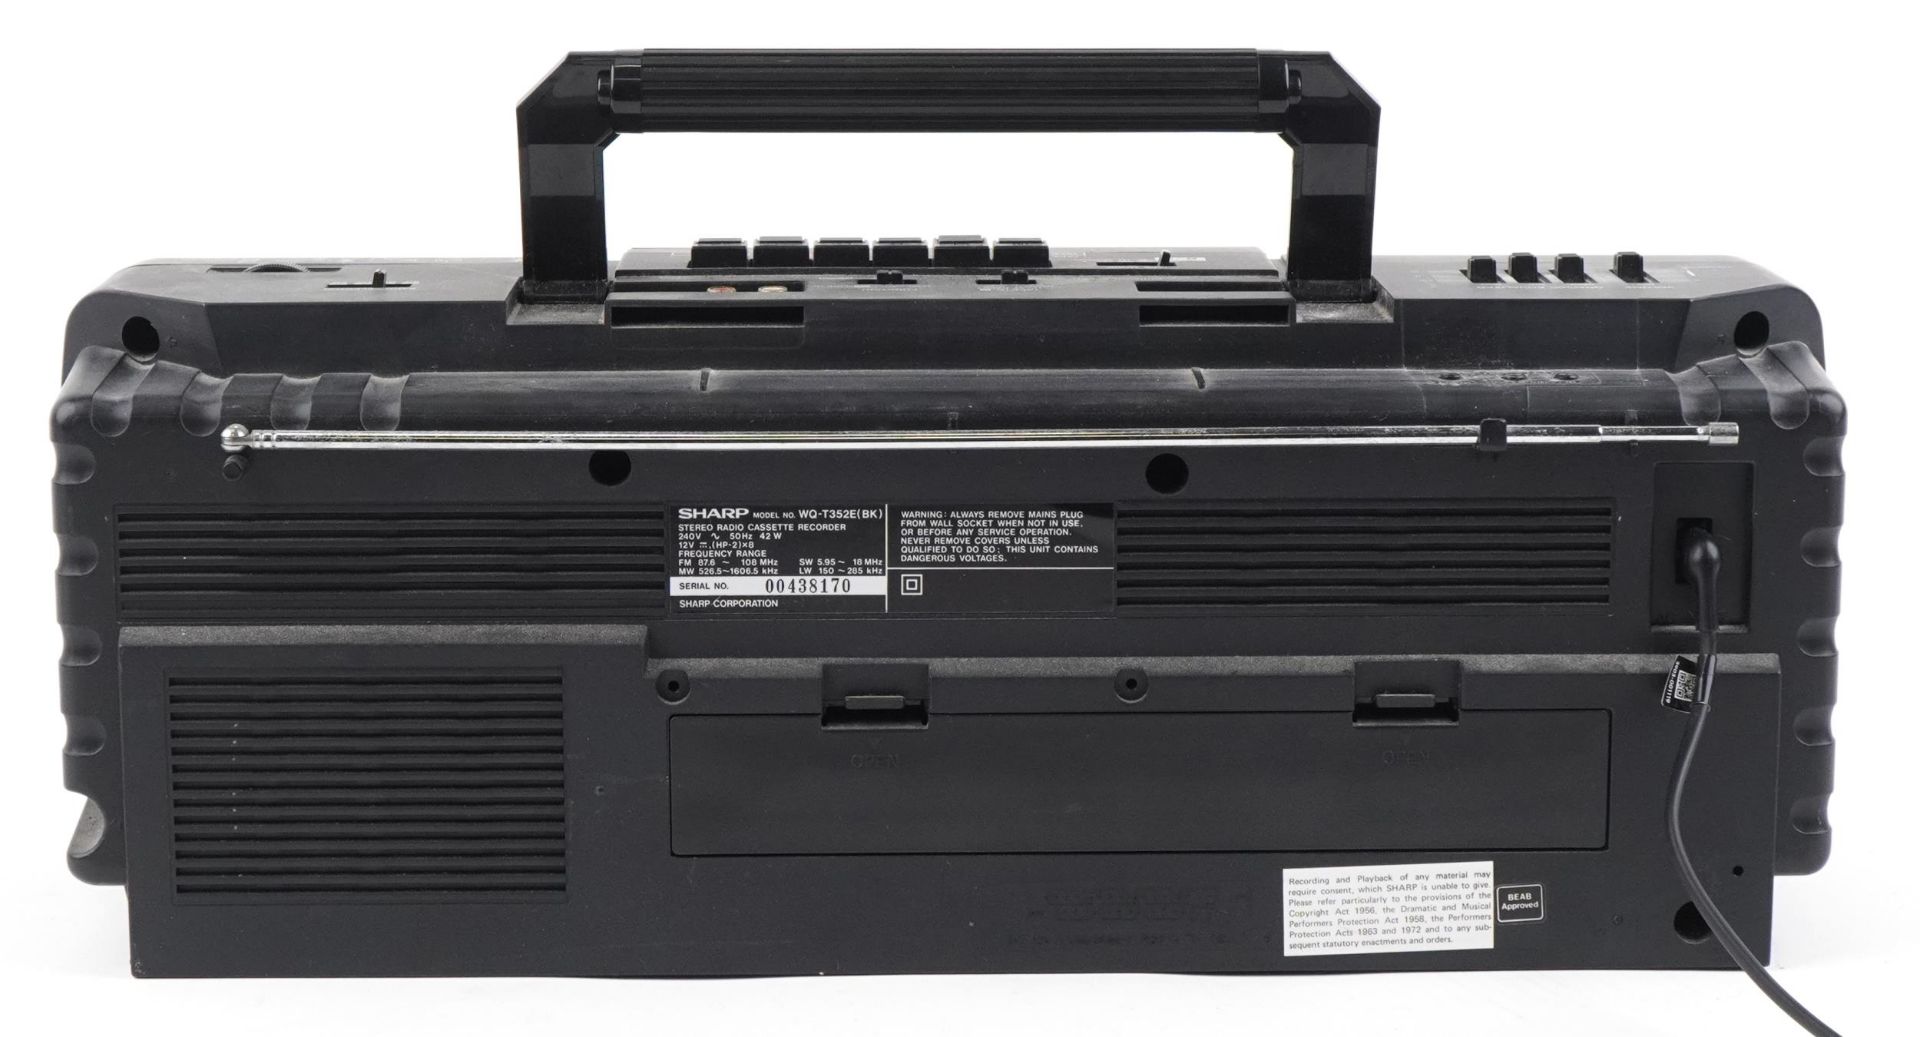 Vintage Sharp stereo radio cassette recorder, model WQ-T352E (BK) : For further information on - Image 2 of 3